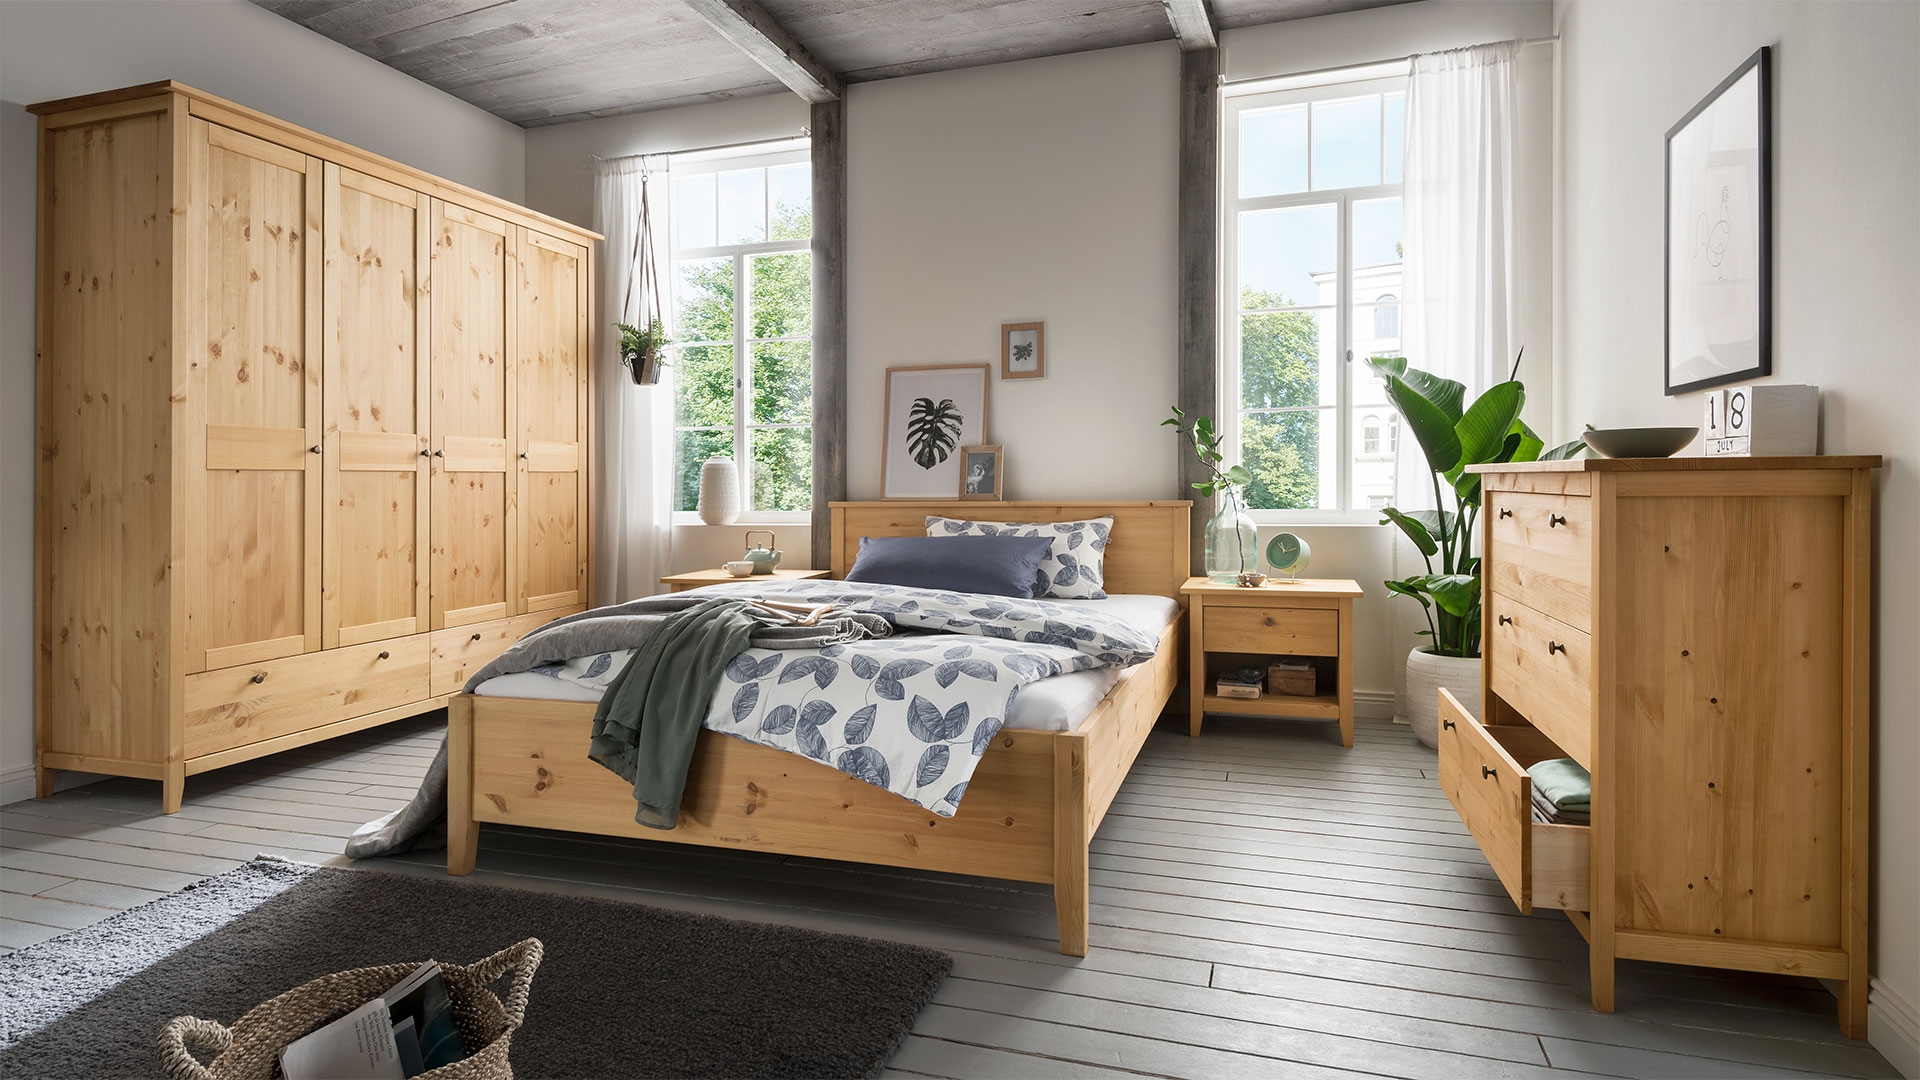 Tegenhanger Dosering papier Massief houten bed "Tusa" | allnatura Nederland